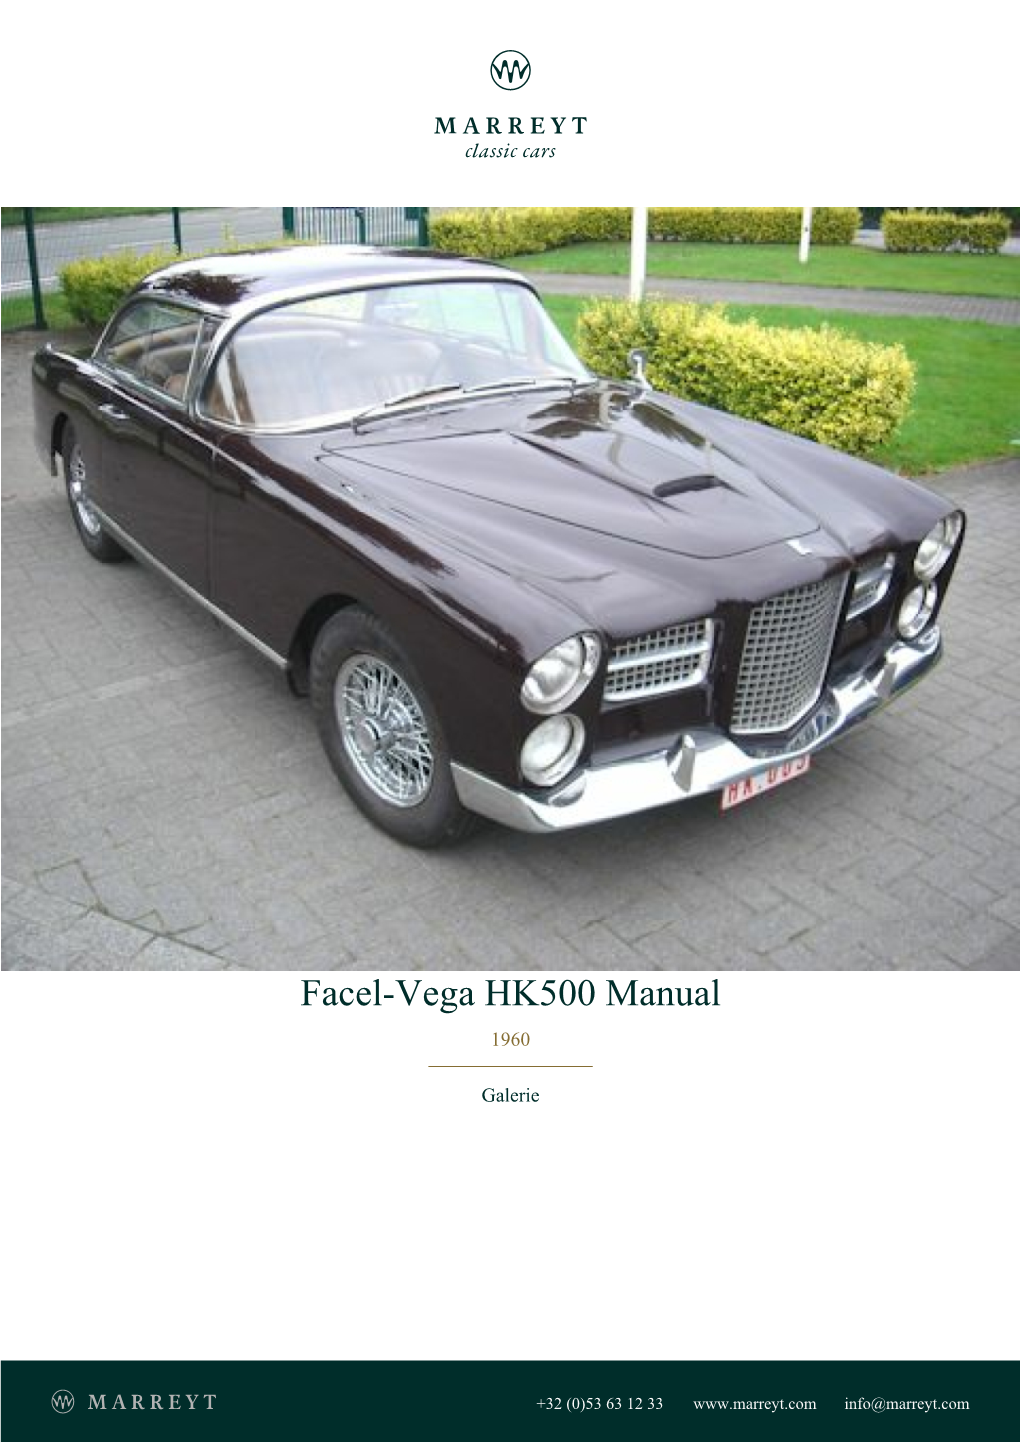 Facel-Vega HK500 Manual 1960